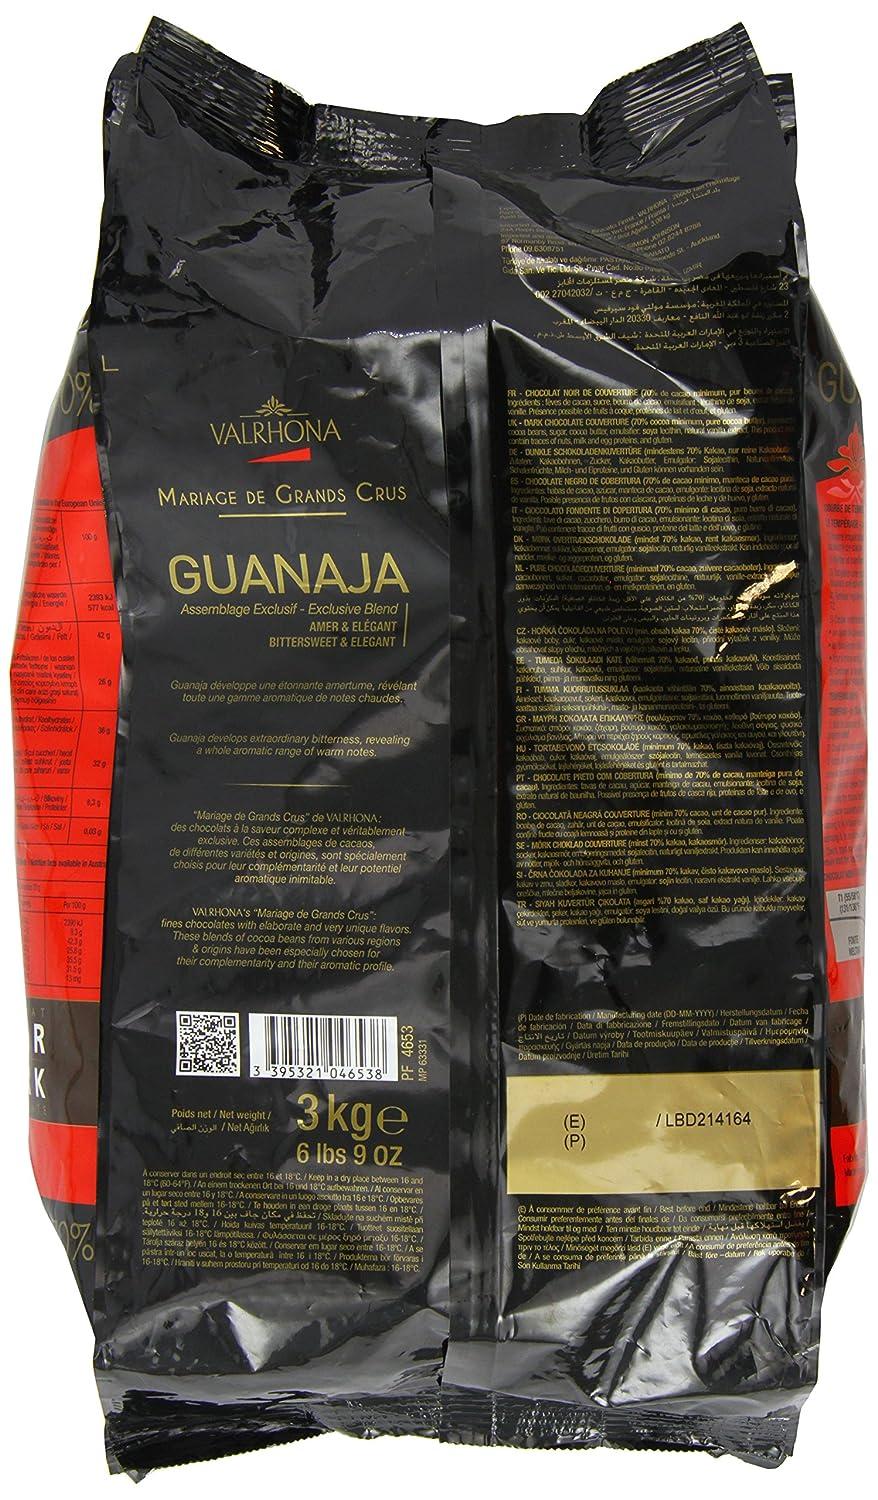 Valrhona Dark Chocolate - 70% Cacao - Guanaja - 6 lbs 9 oz bag of